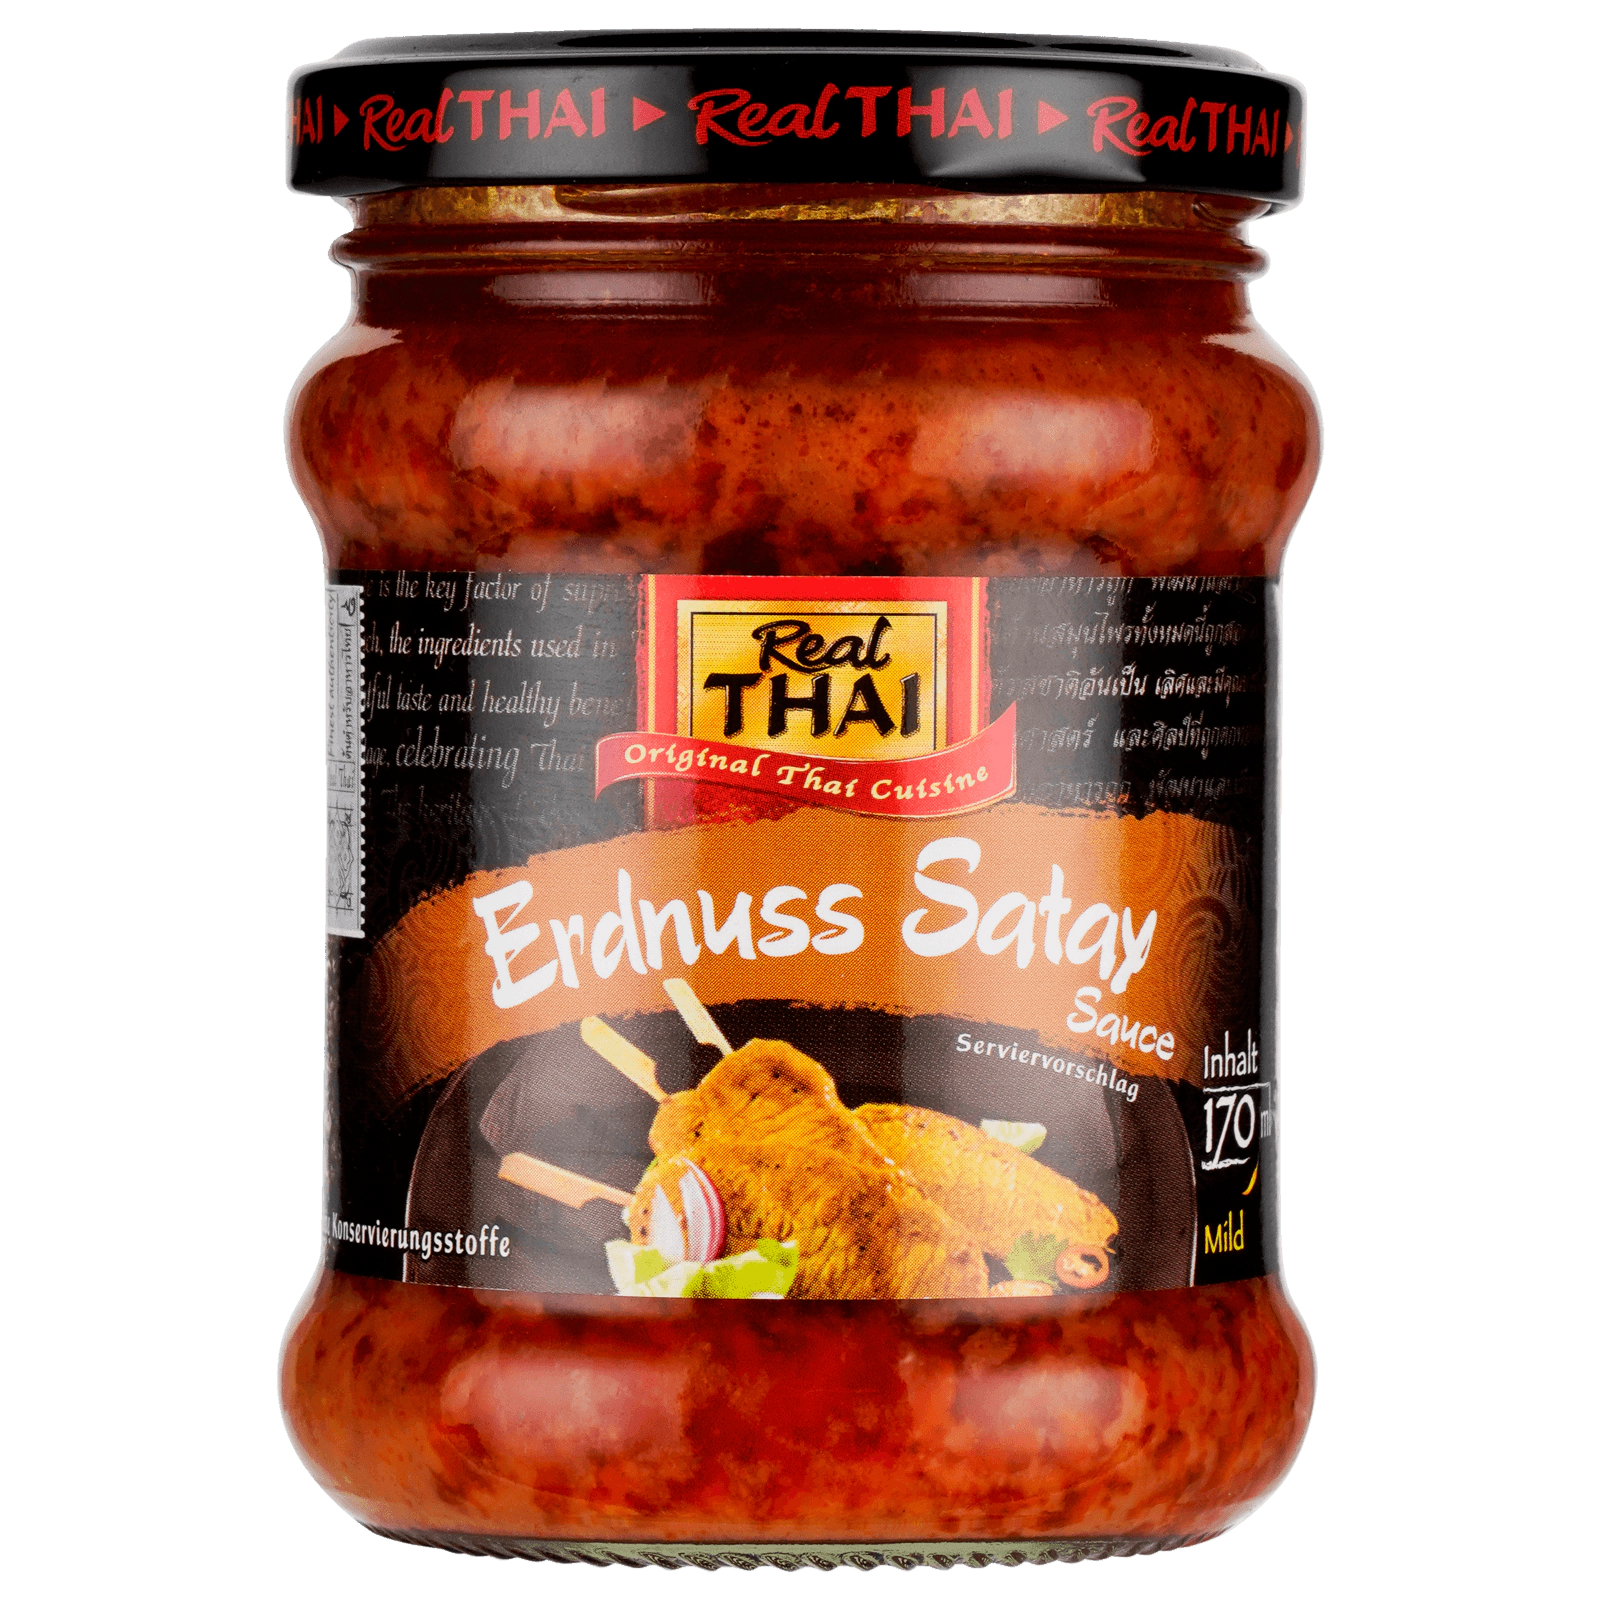 Real Thai Erdnuss Satay Sauce 170ml bei REWE online bestellen!